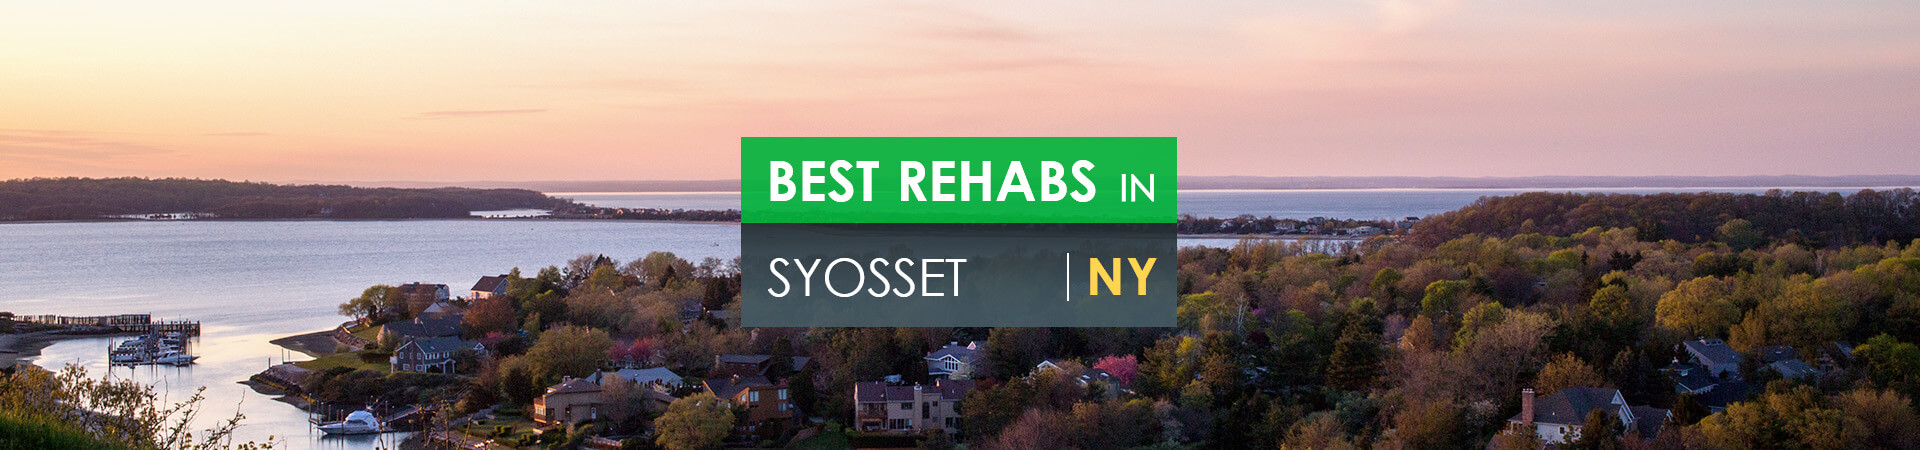 Best rehabs in Syosset, NY